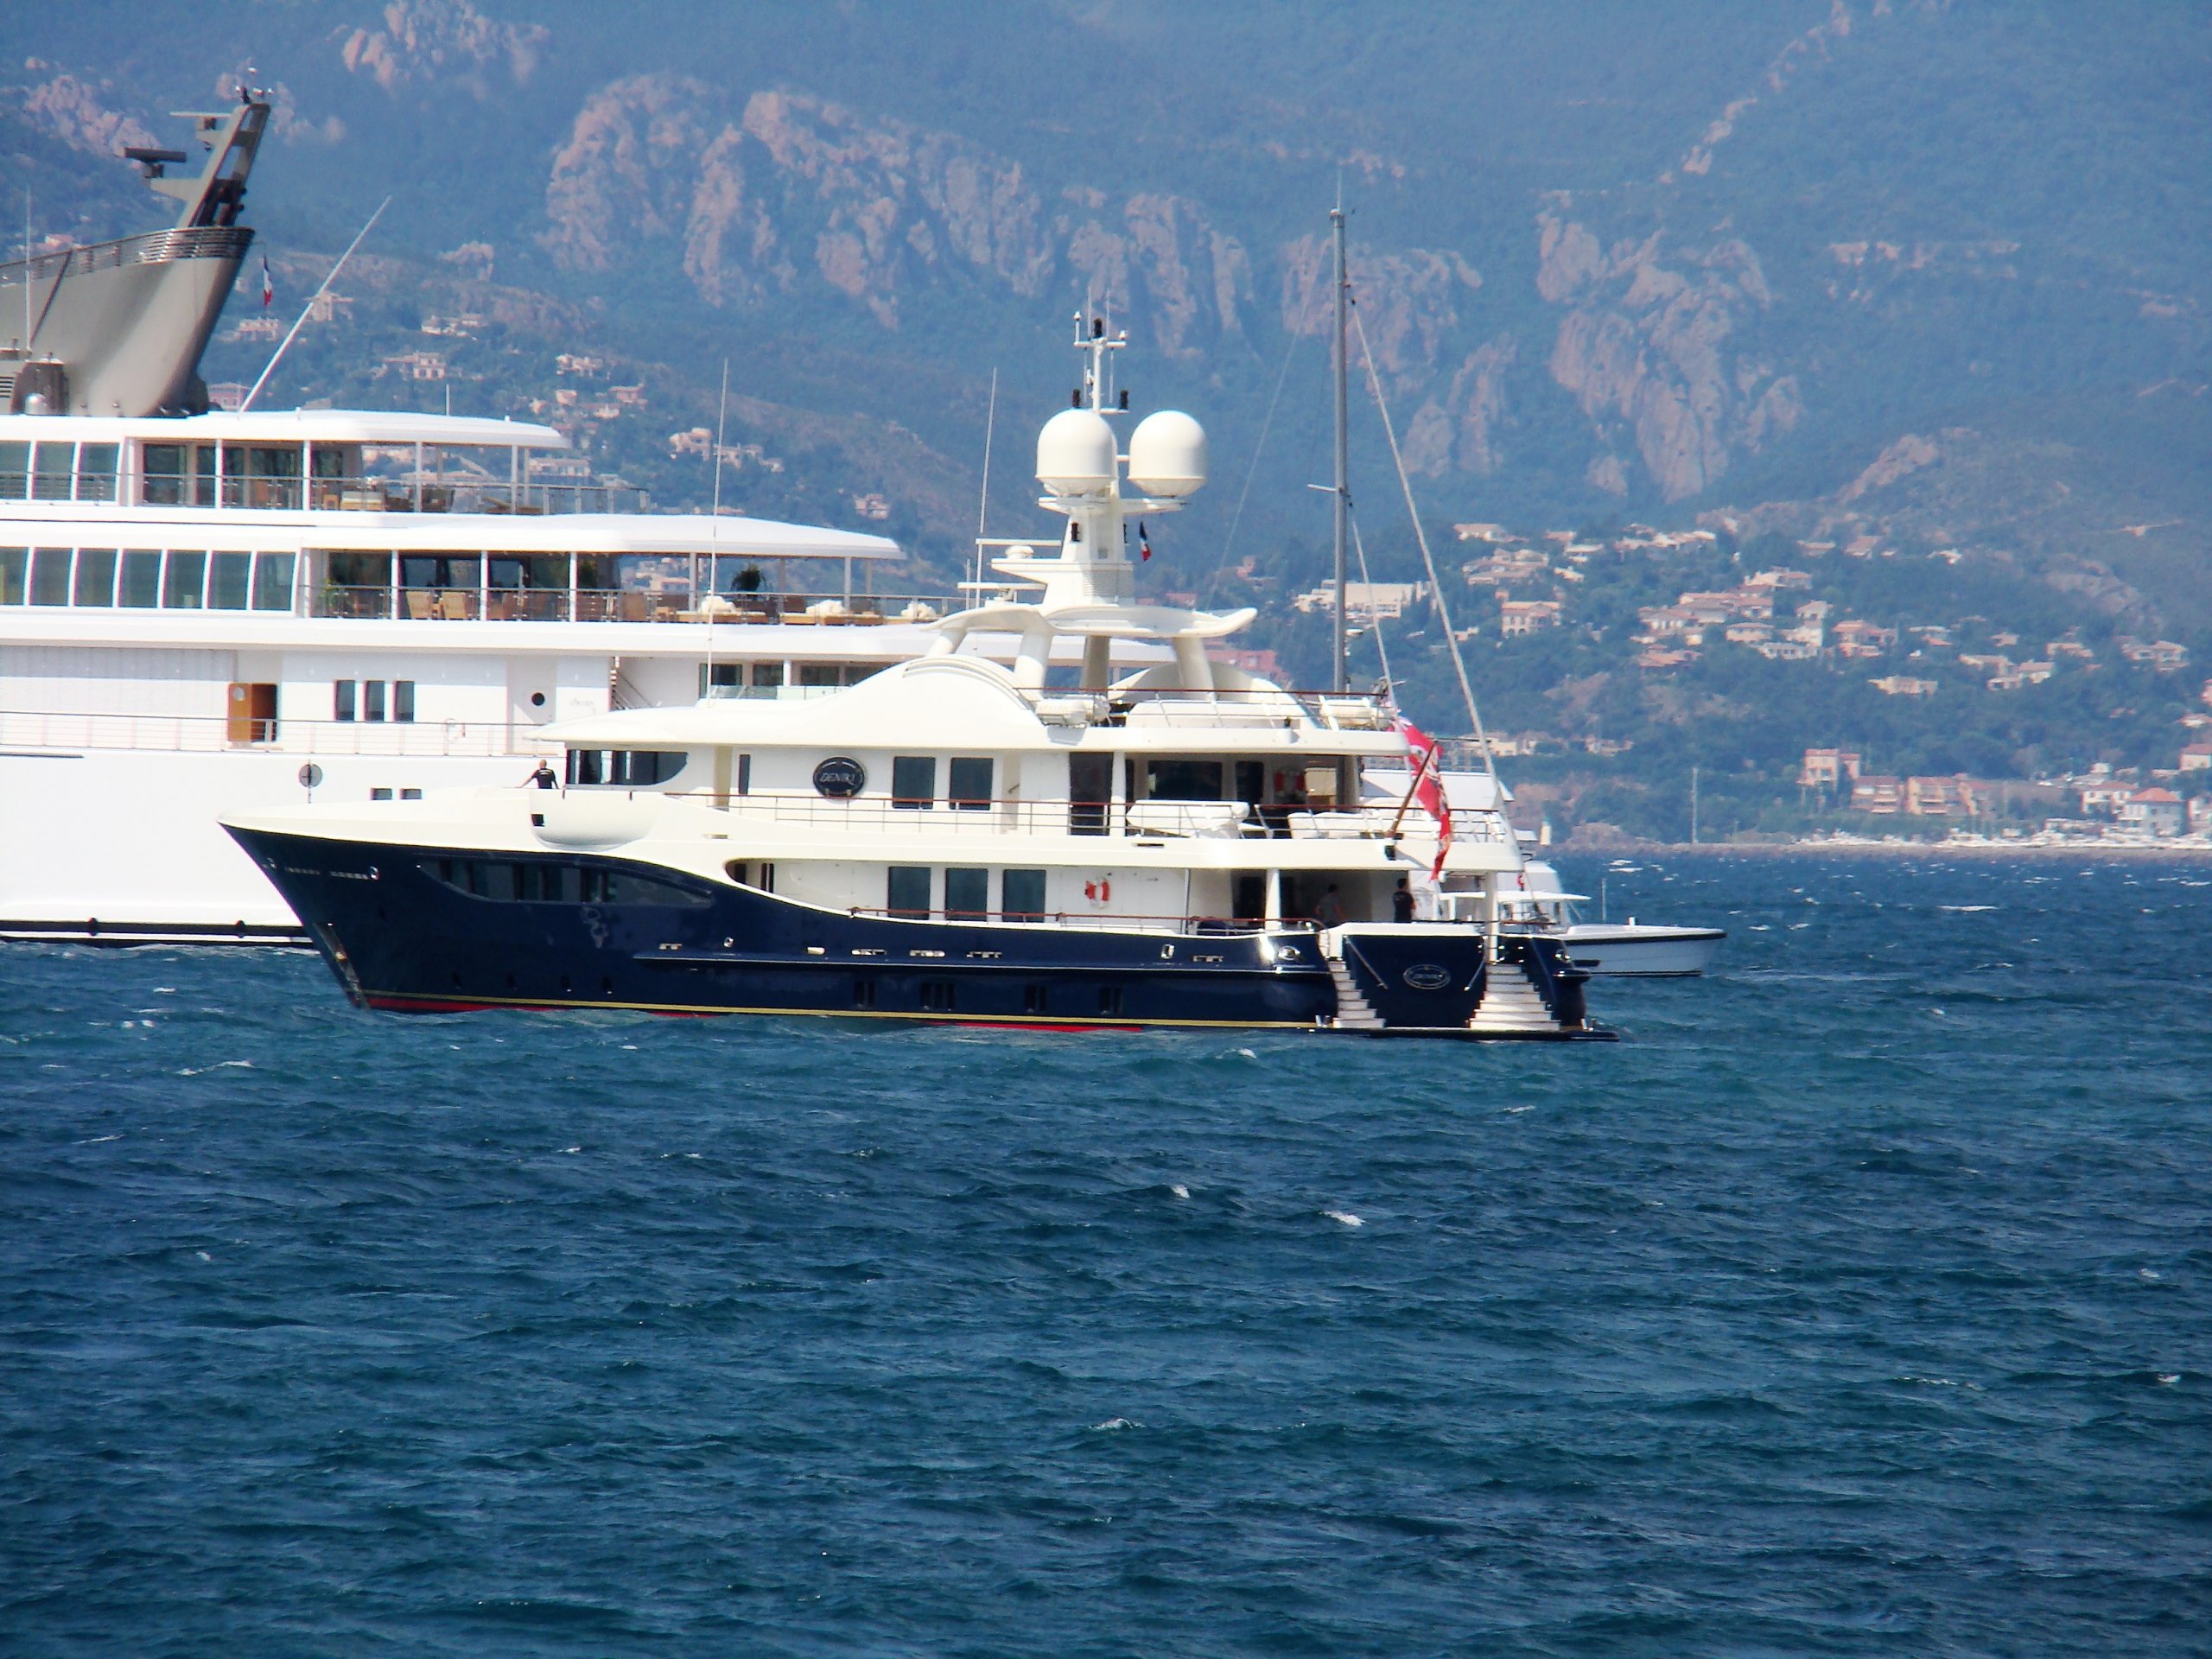 Deniki yacht - Amels - 2007 - propriétaire Marcel Boekhoorn